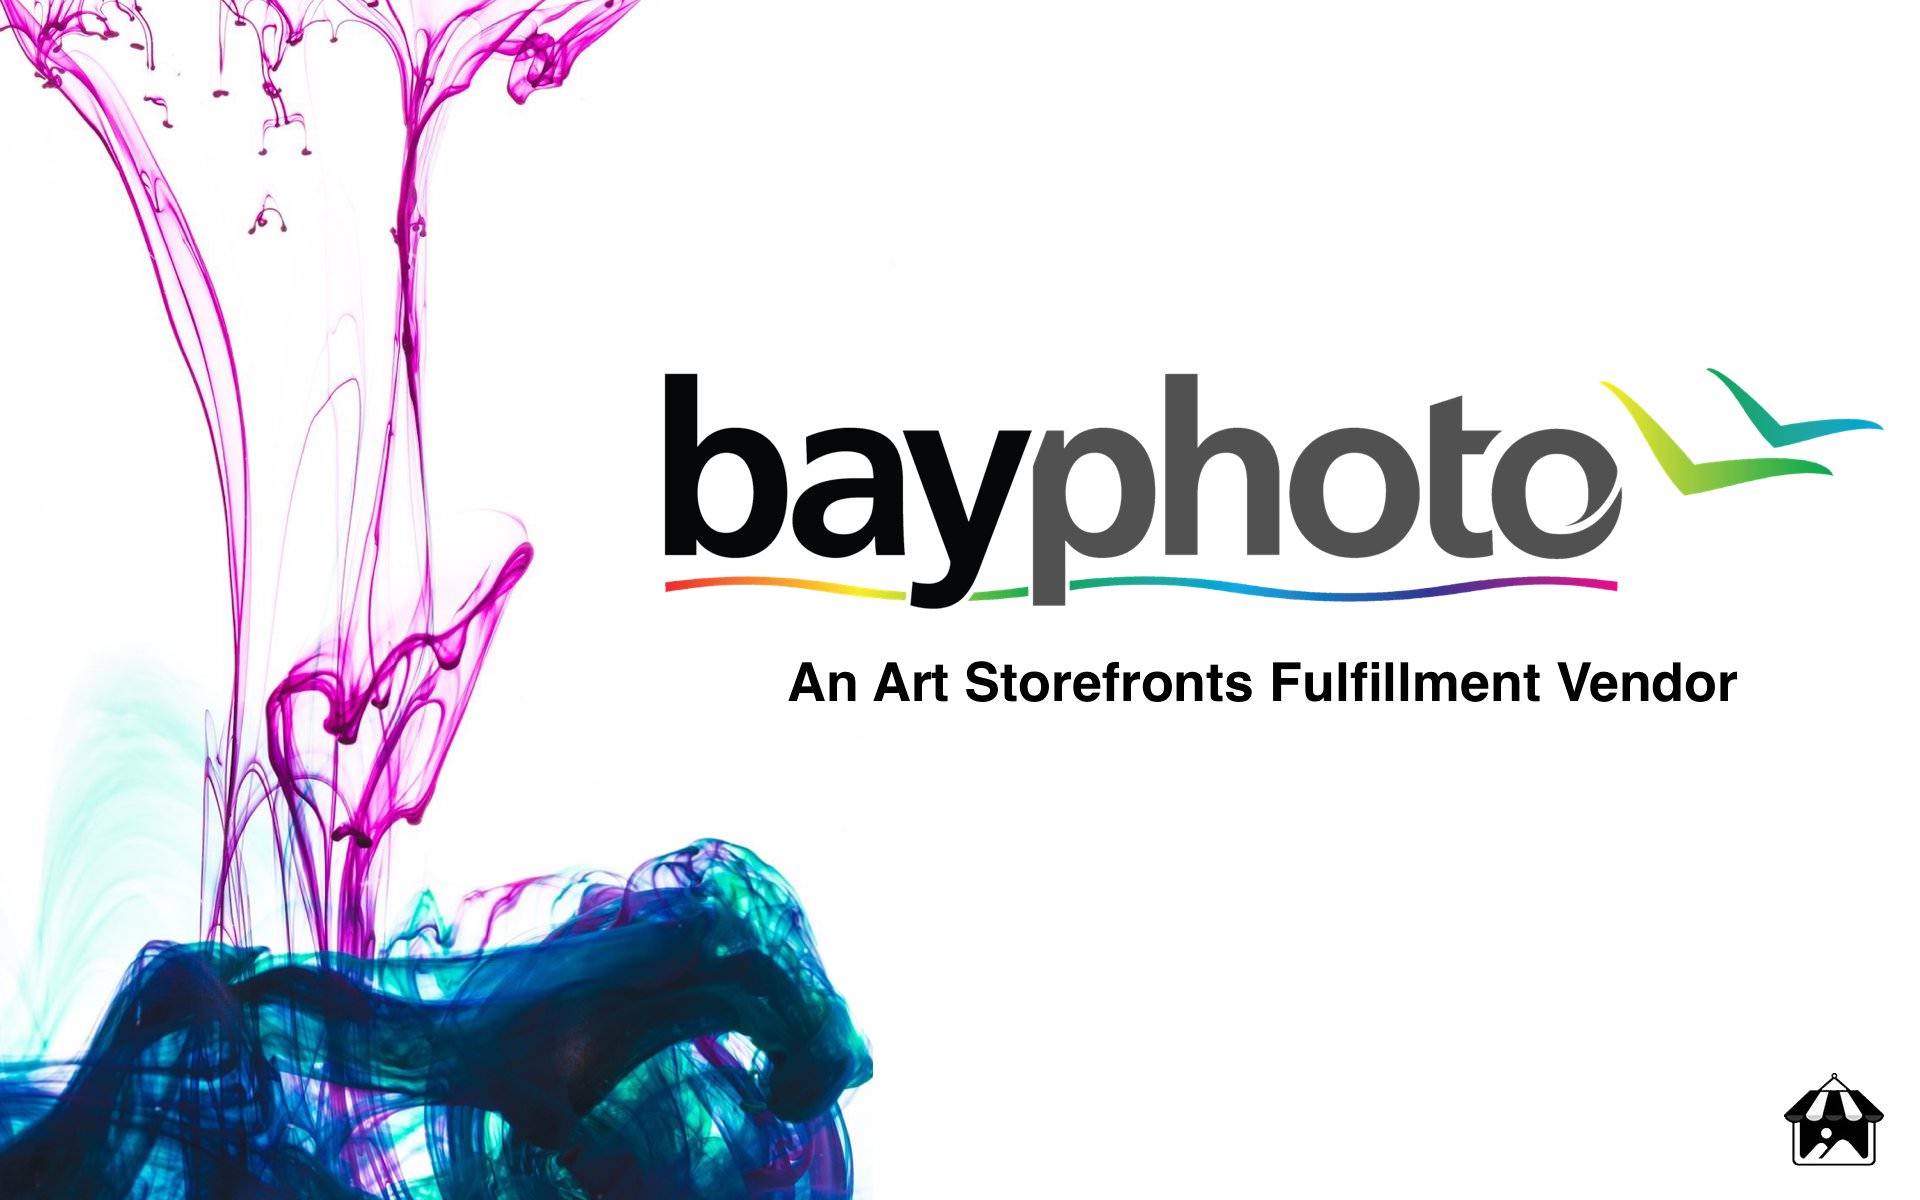 bay photo art storefronts